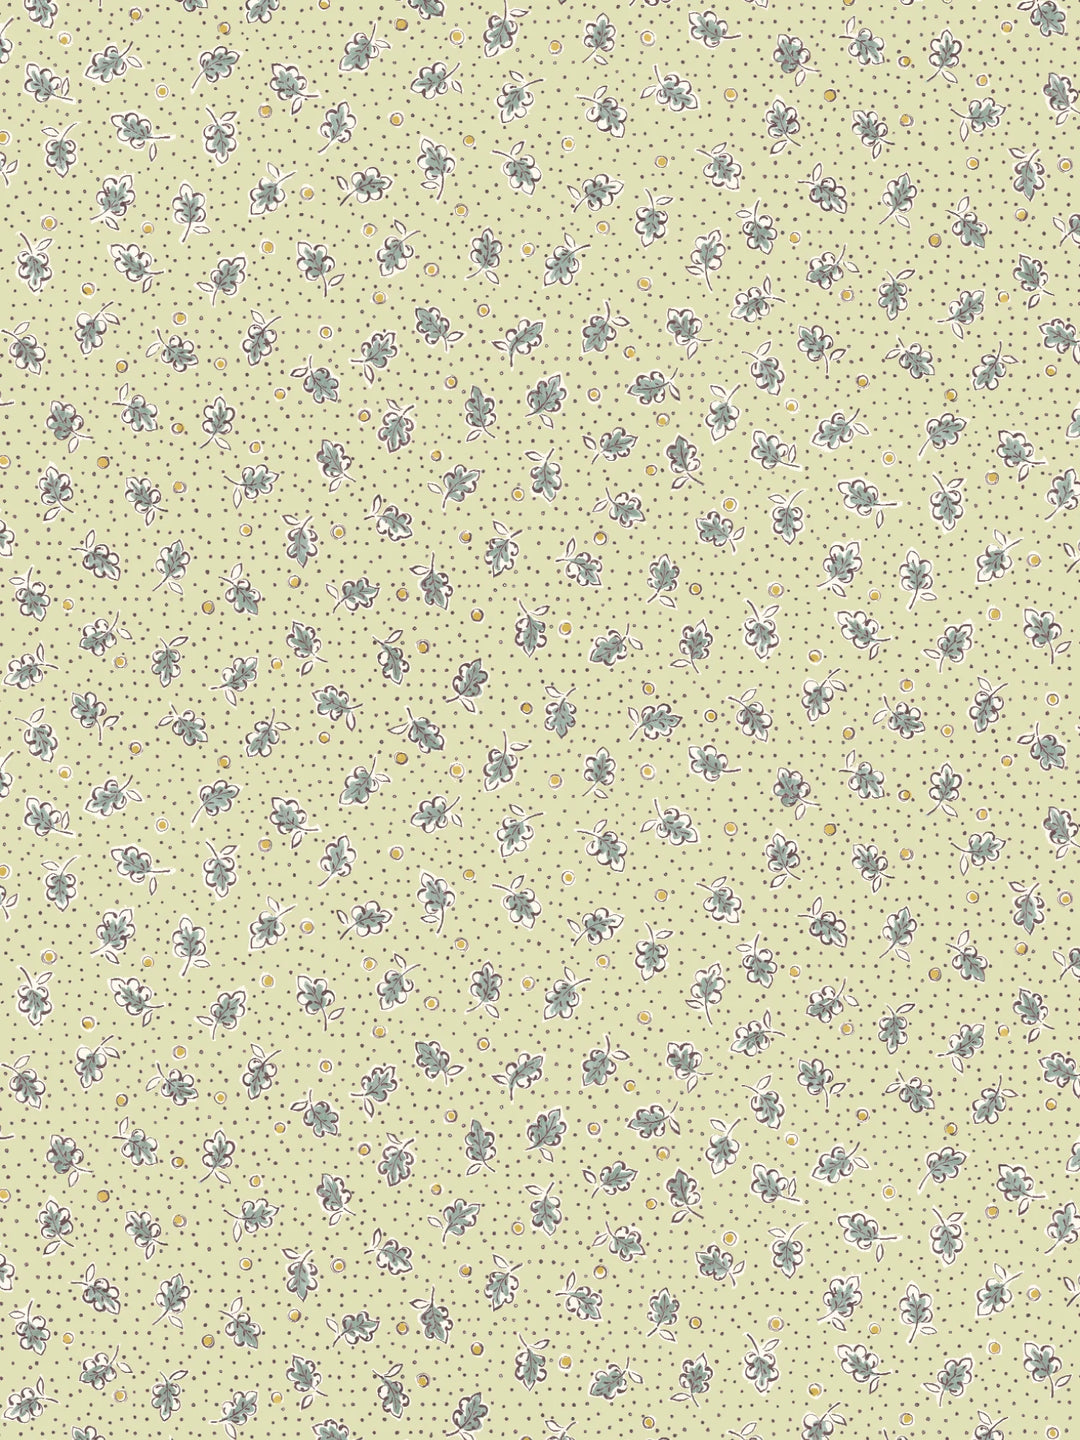 mille-feuilles-wallpaper-pistachio-green-dainty-leaves-dots